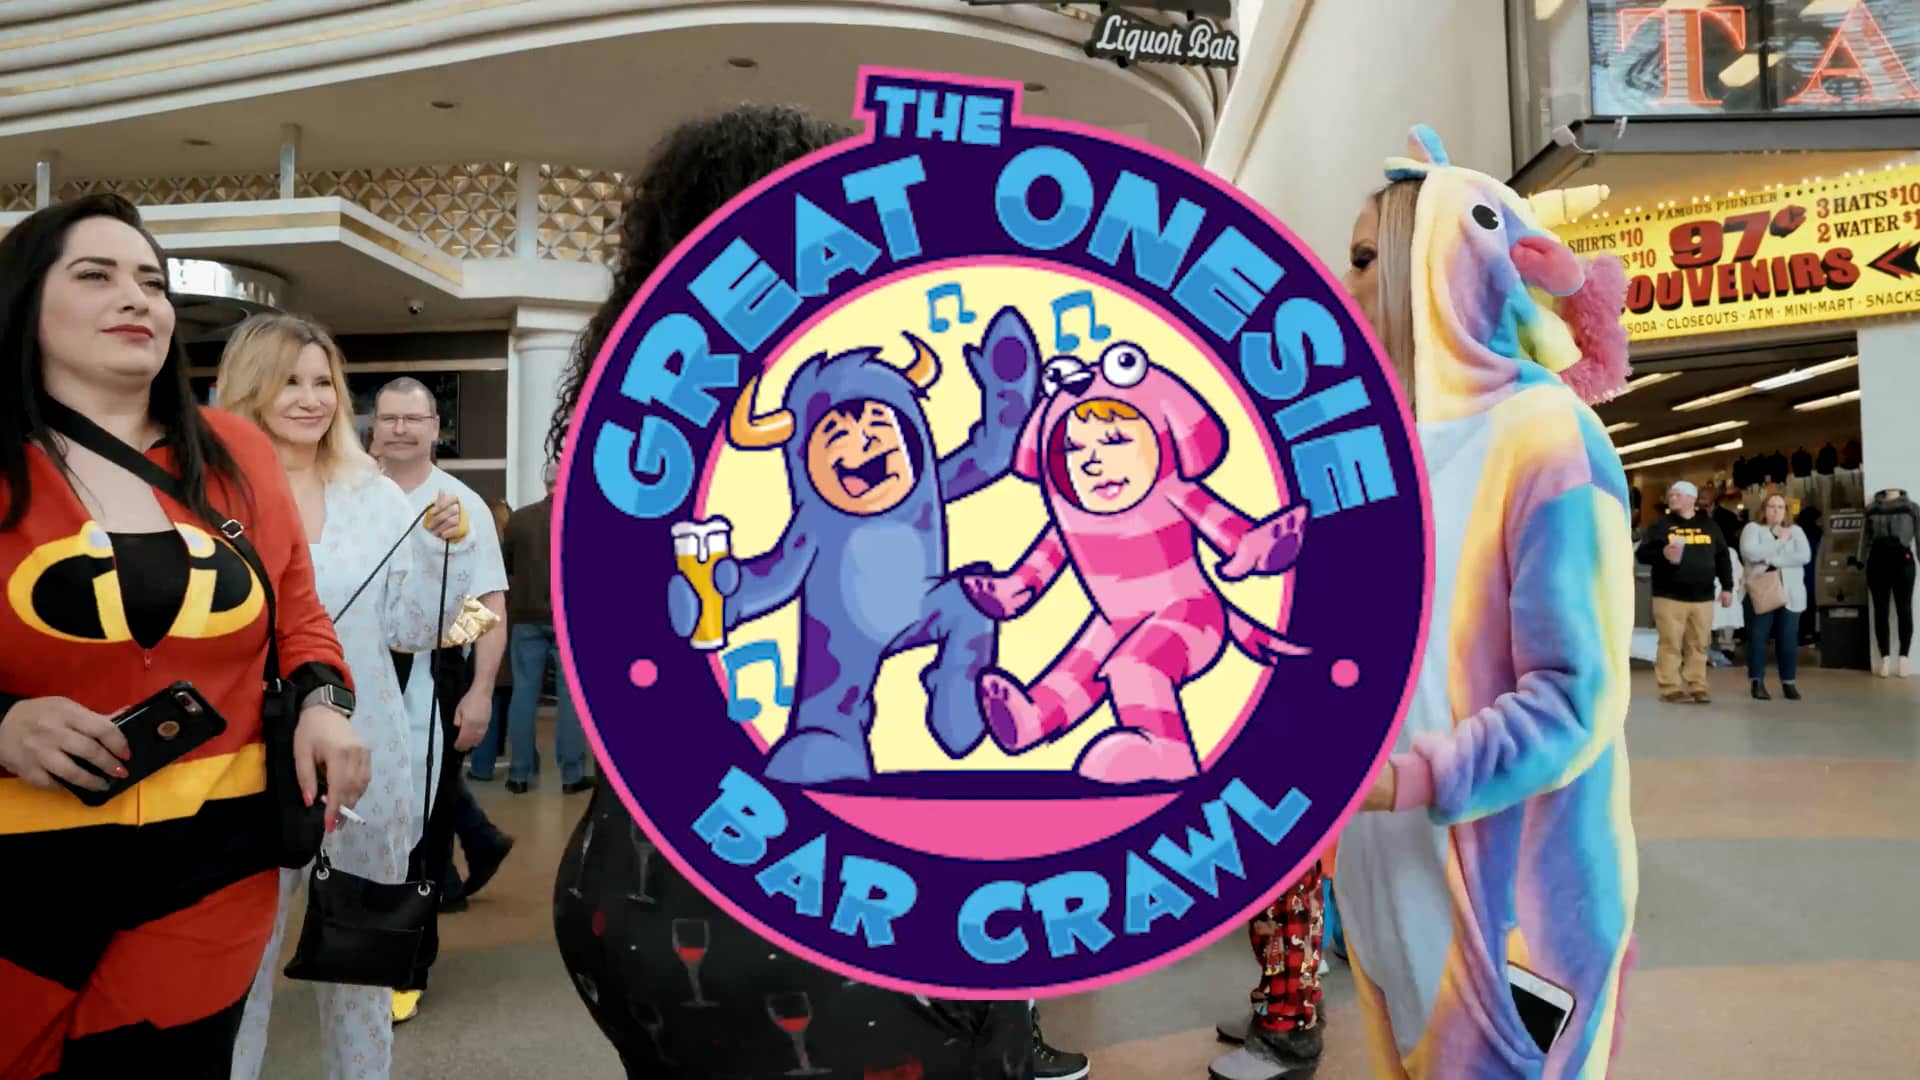 Great Onesie Bar Crawl 2020 (Vegas) on Vimeo